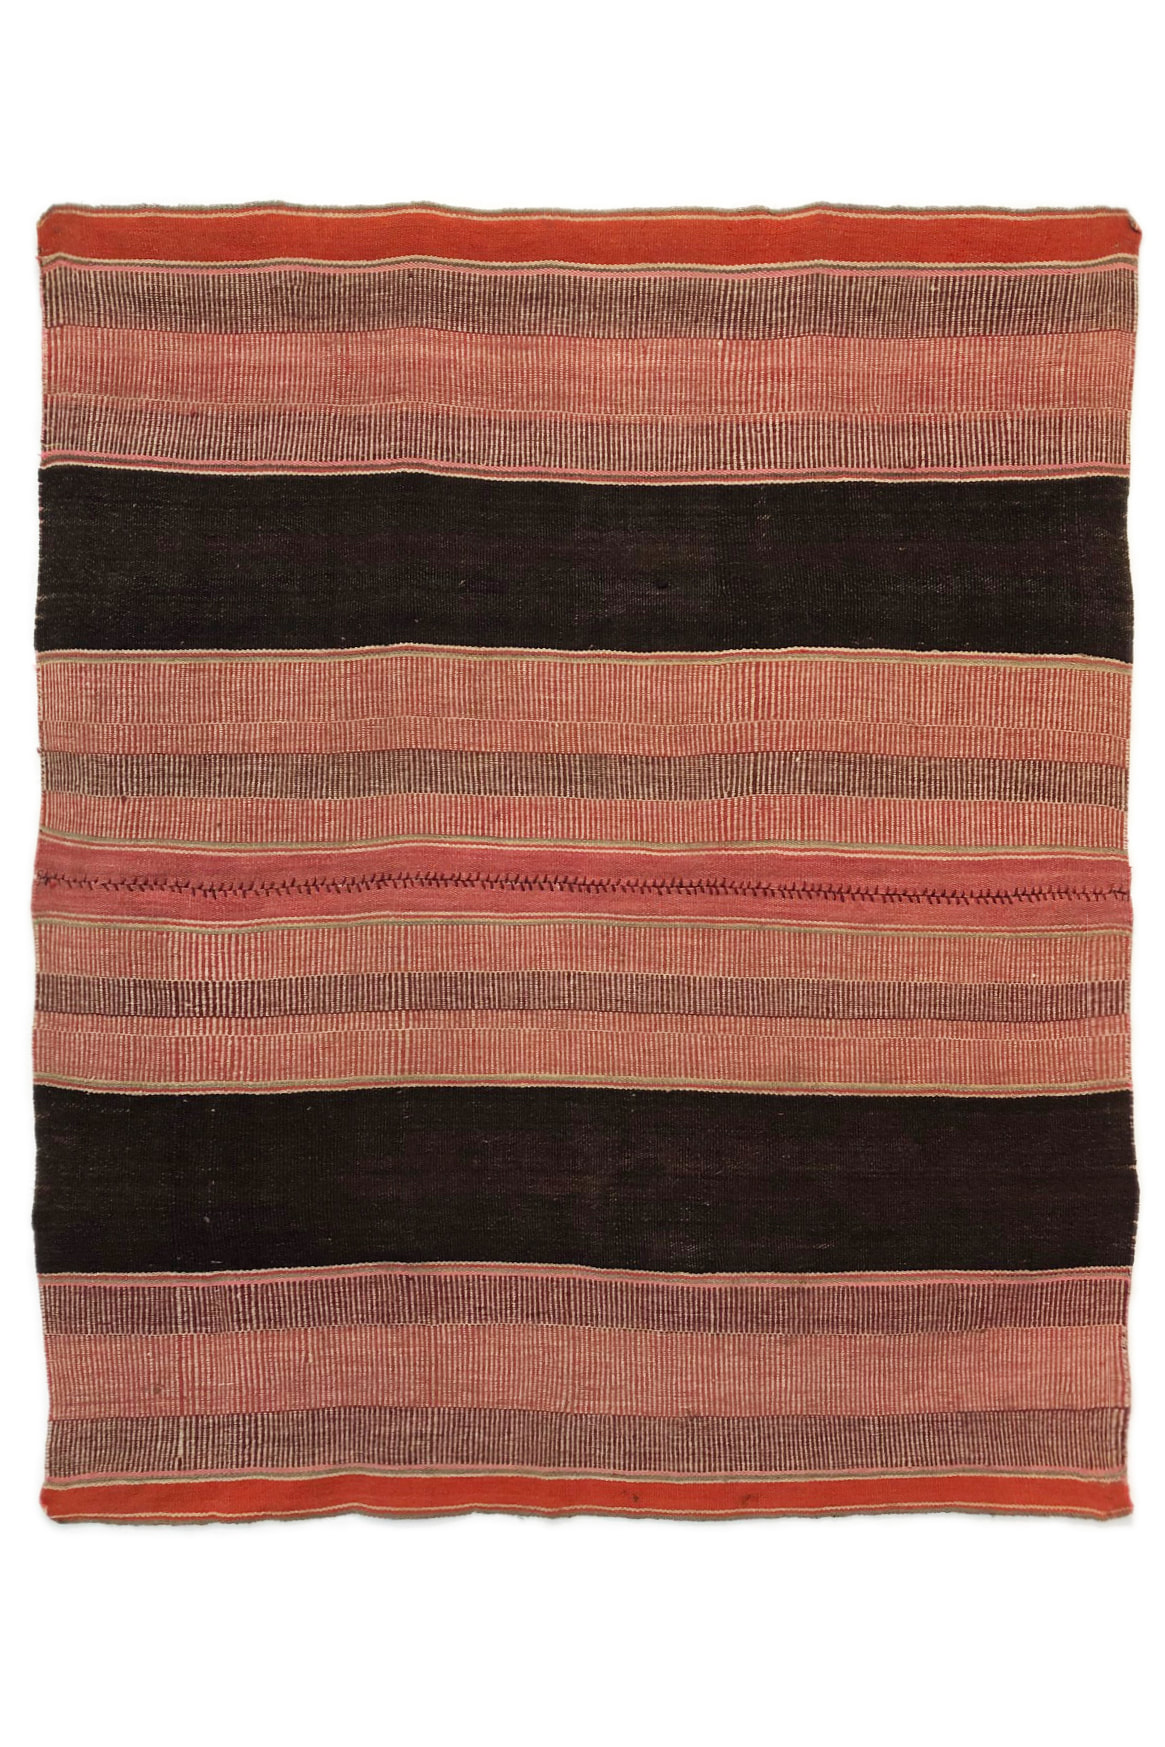 Peruvian Vintage Textile Drawstring Bag - Small